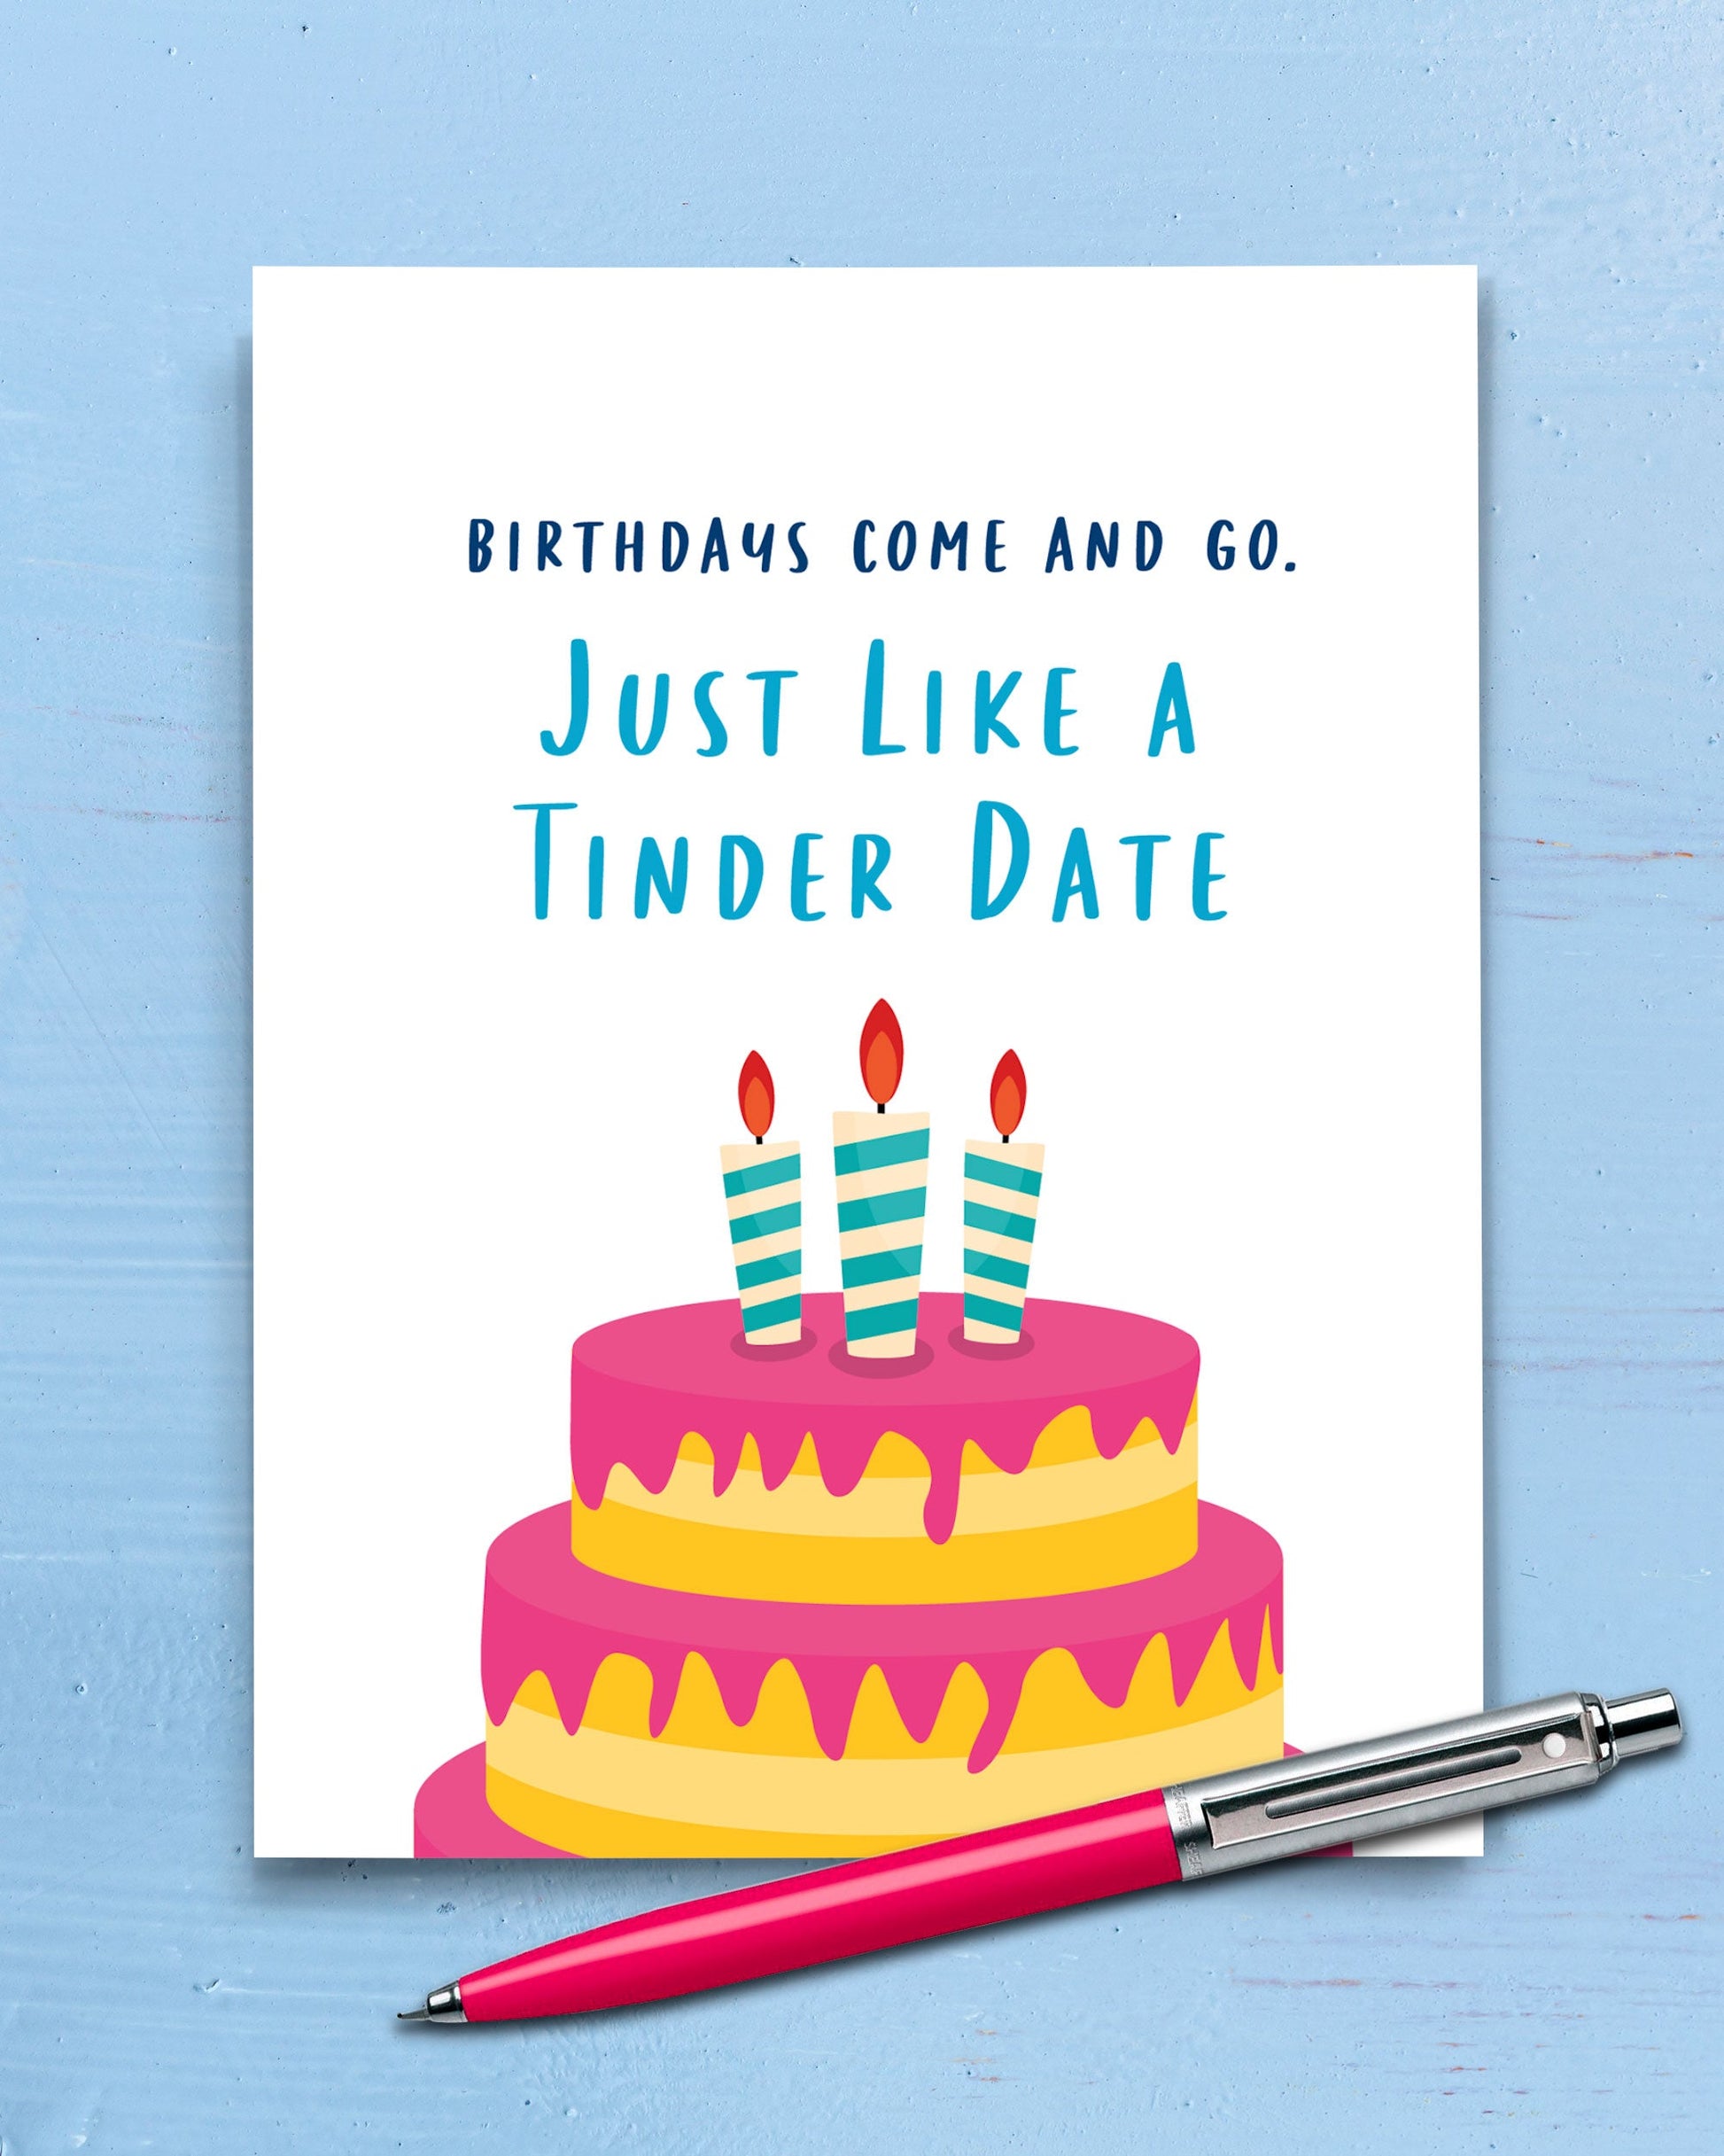 Tinder Date Funny Birthday Card - Transit Design